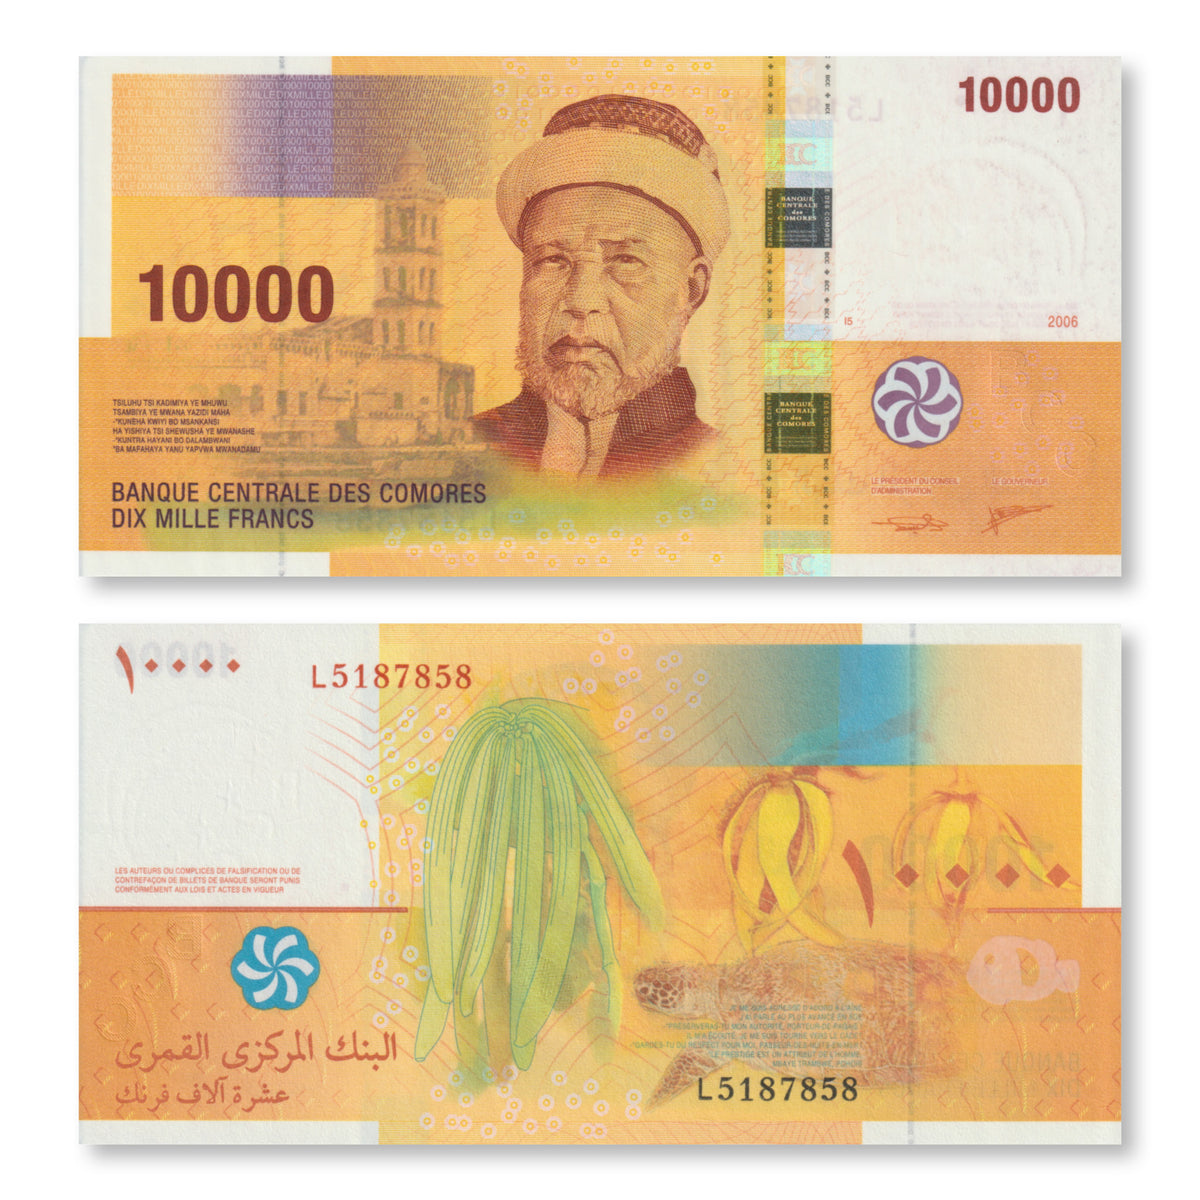 Comoros 10000 Francs, 2006, B310c, P19, UNC - Robert's World Money - World Banknotes